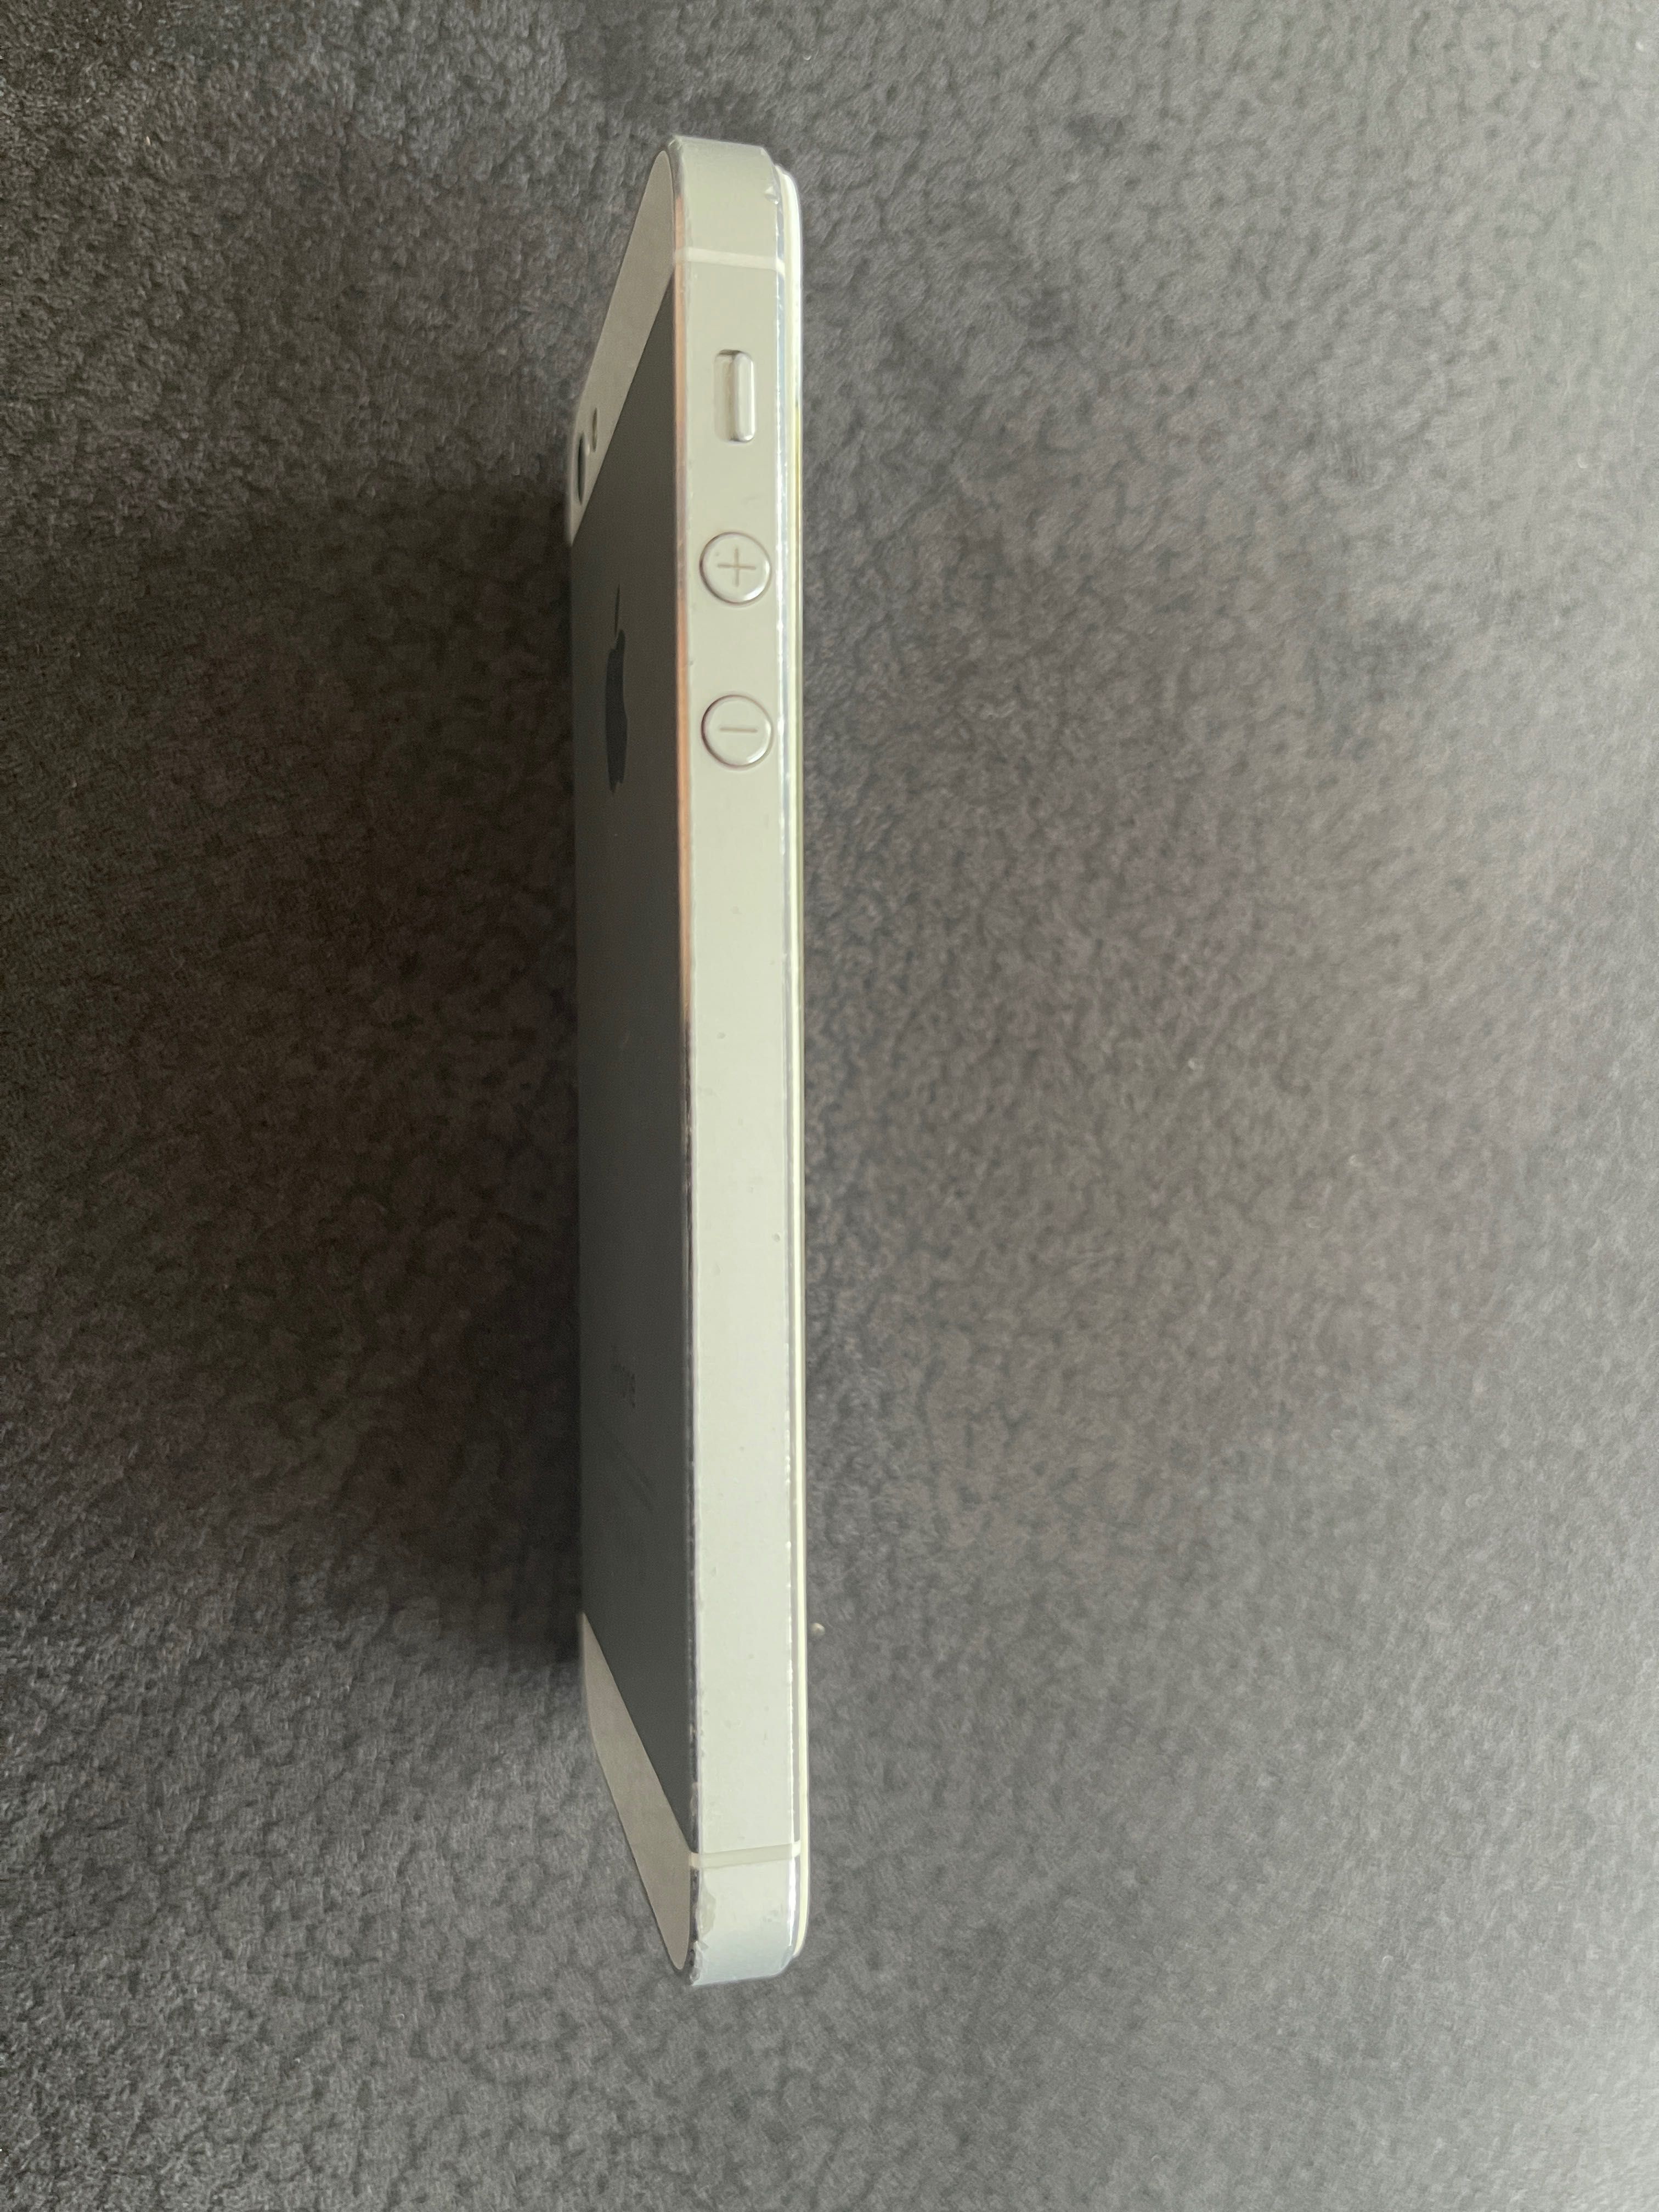 iPhone 5 16GB White